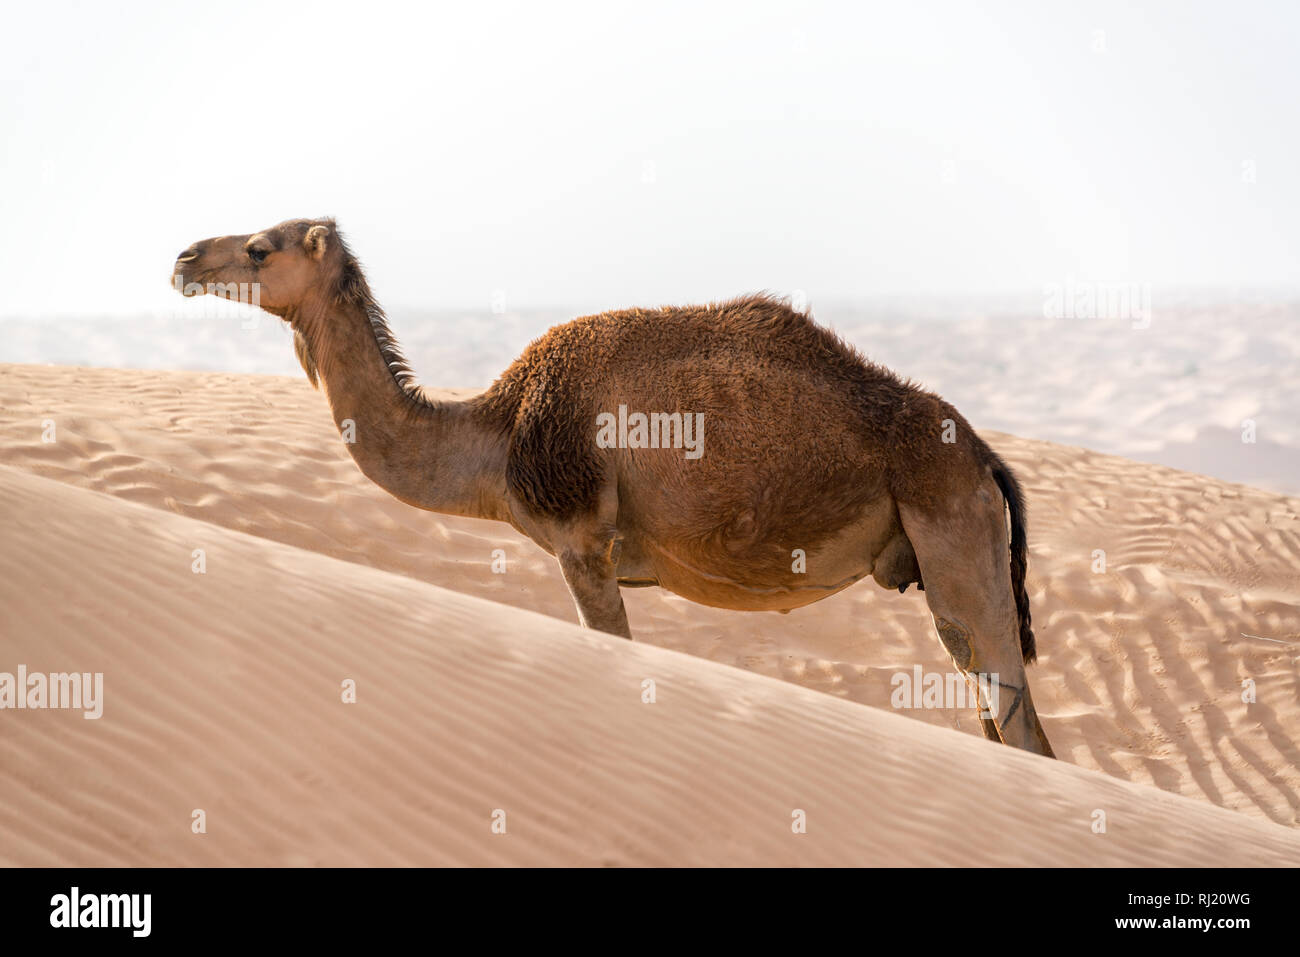 A single solitary camel standing amongst the sand dunes in the Sahara Desert near Douz, Tunisia Stock Photo